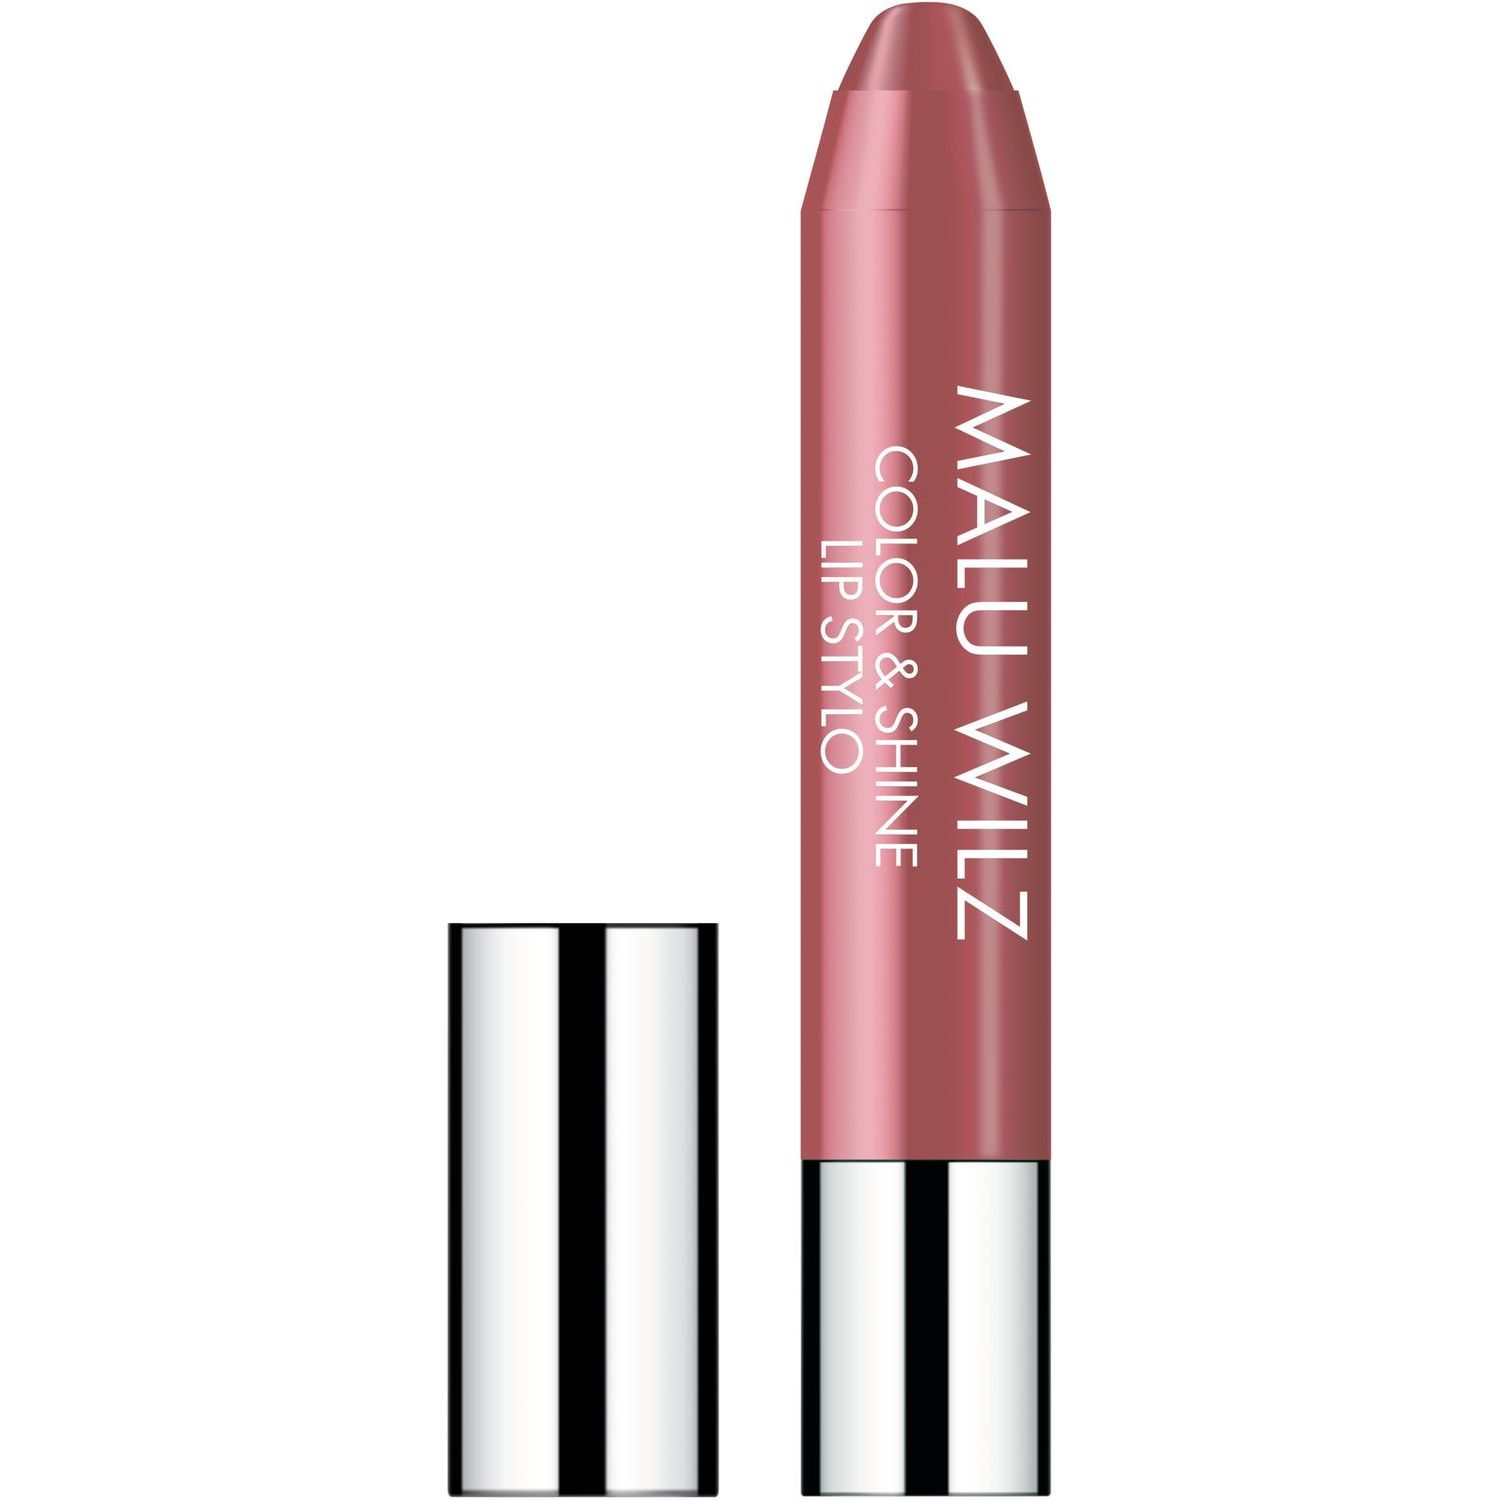 Увлажняющая губная помада Malu Wilz Color&Shine Lip Stylo, тон 40 (розово-коричневый), 11 г - фото 1